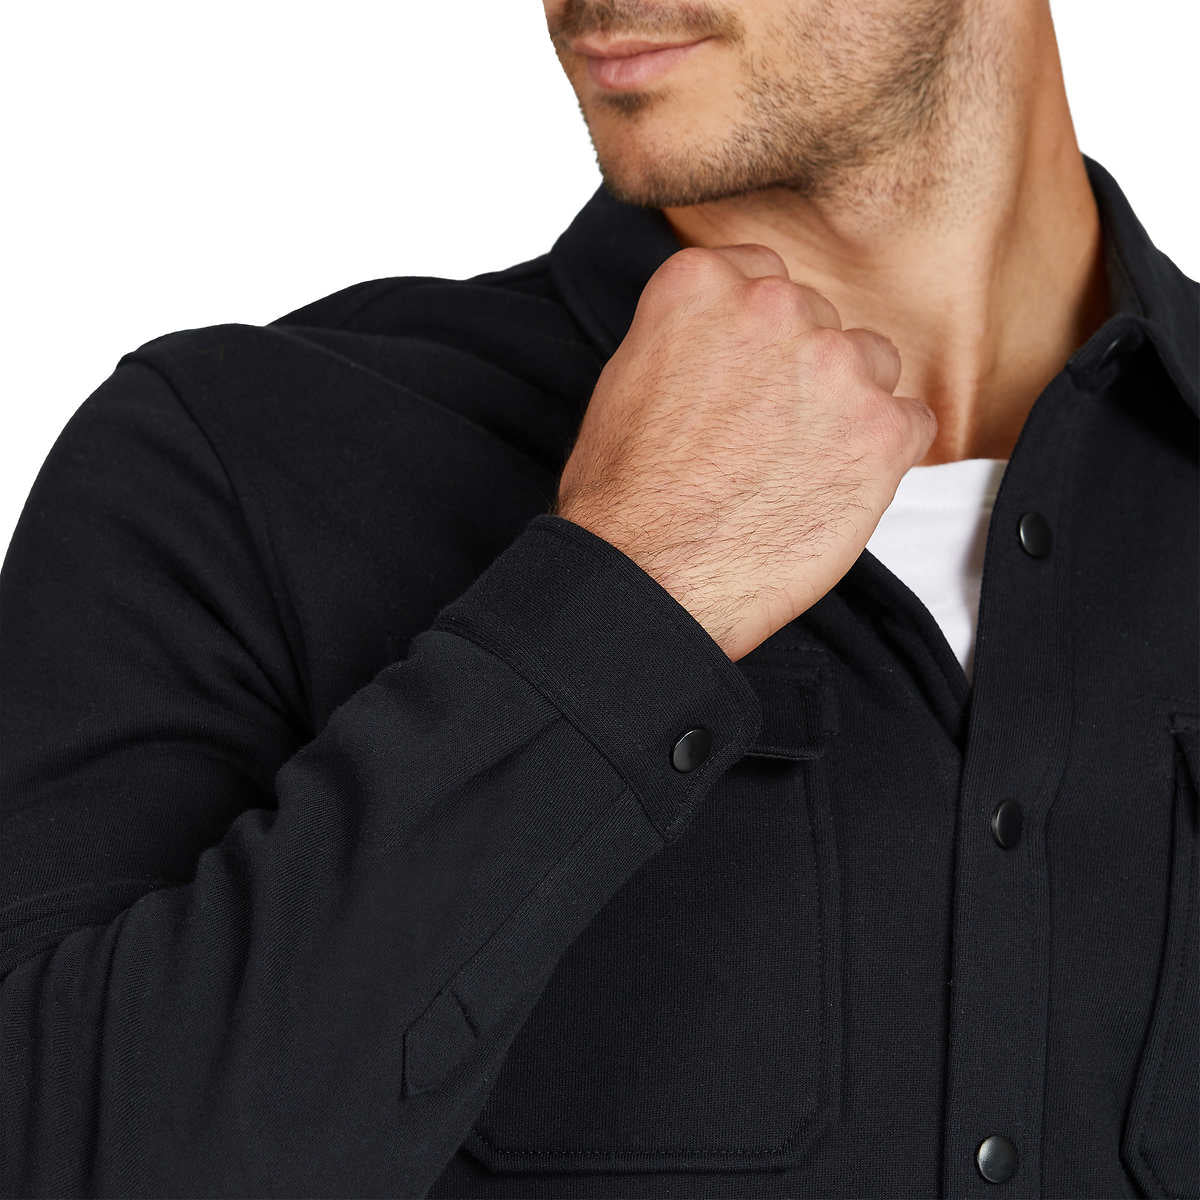 frankbyfrankandoak-veste-chemise-tricot-lourd-homme-men-heavy-knit-jacket-4